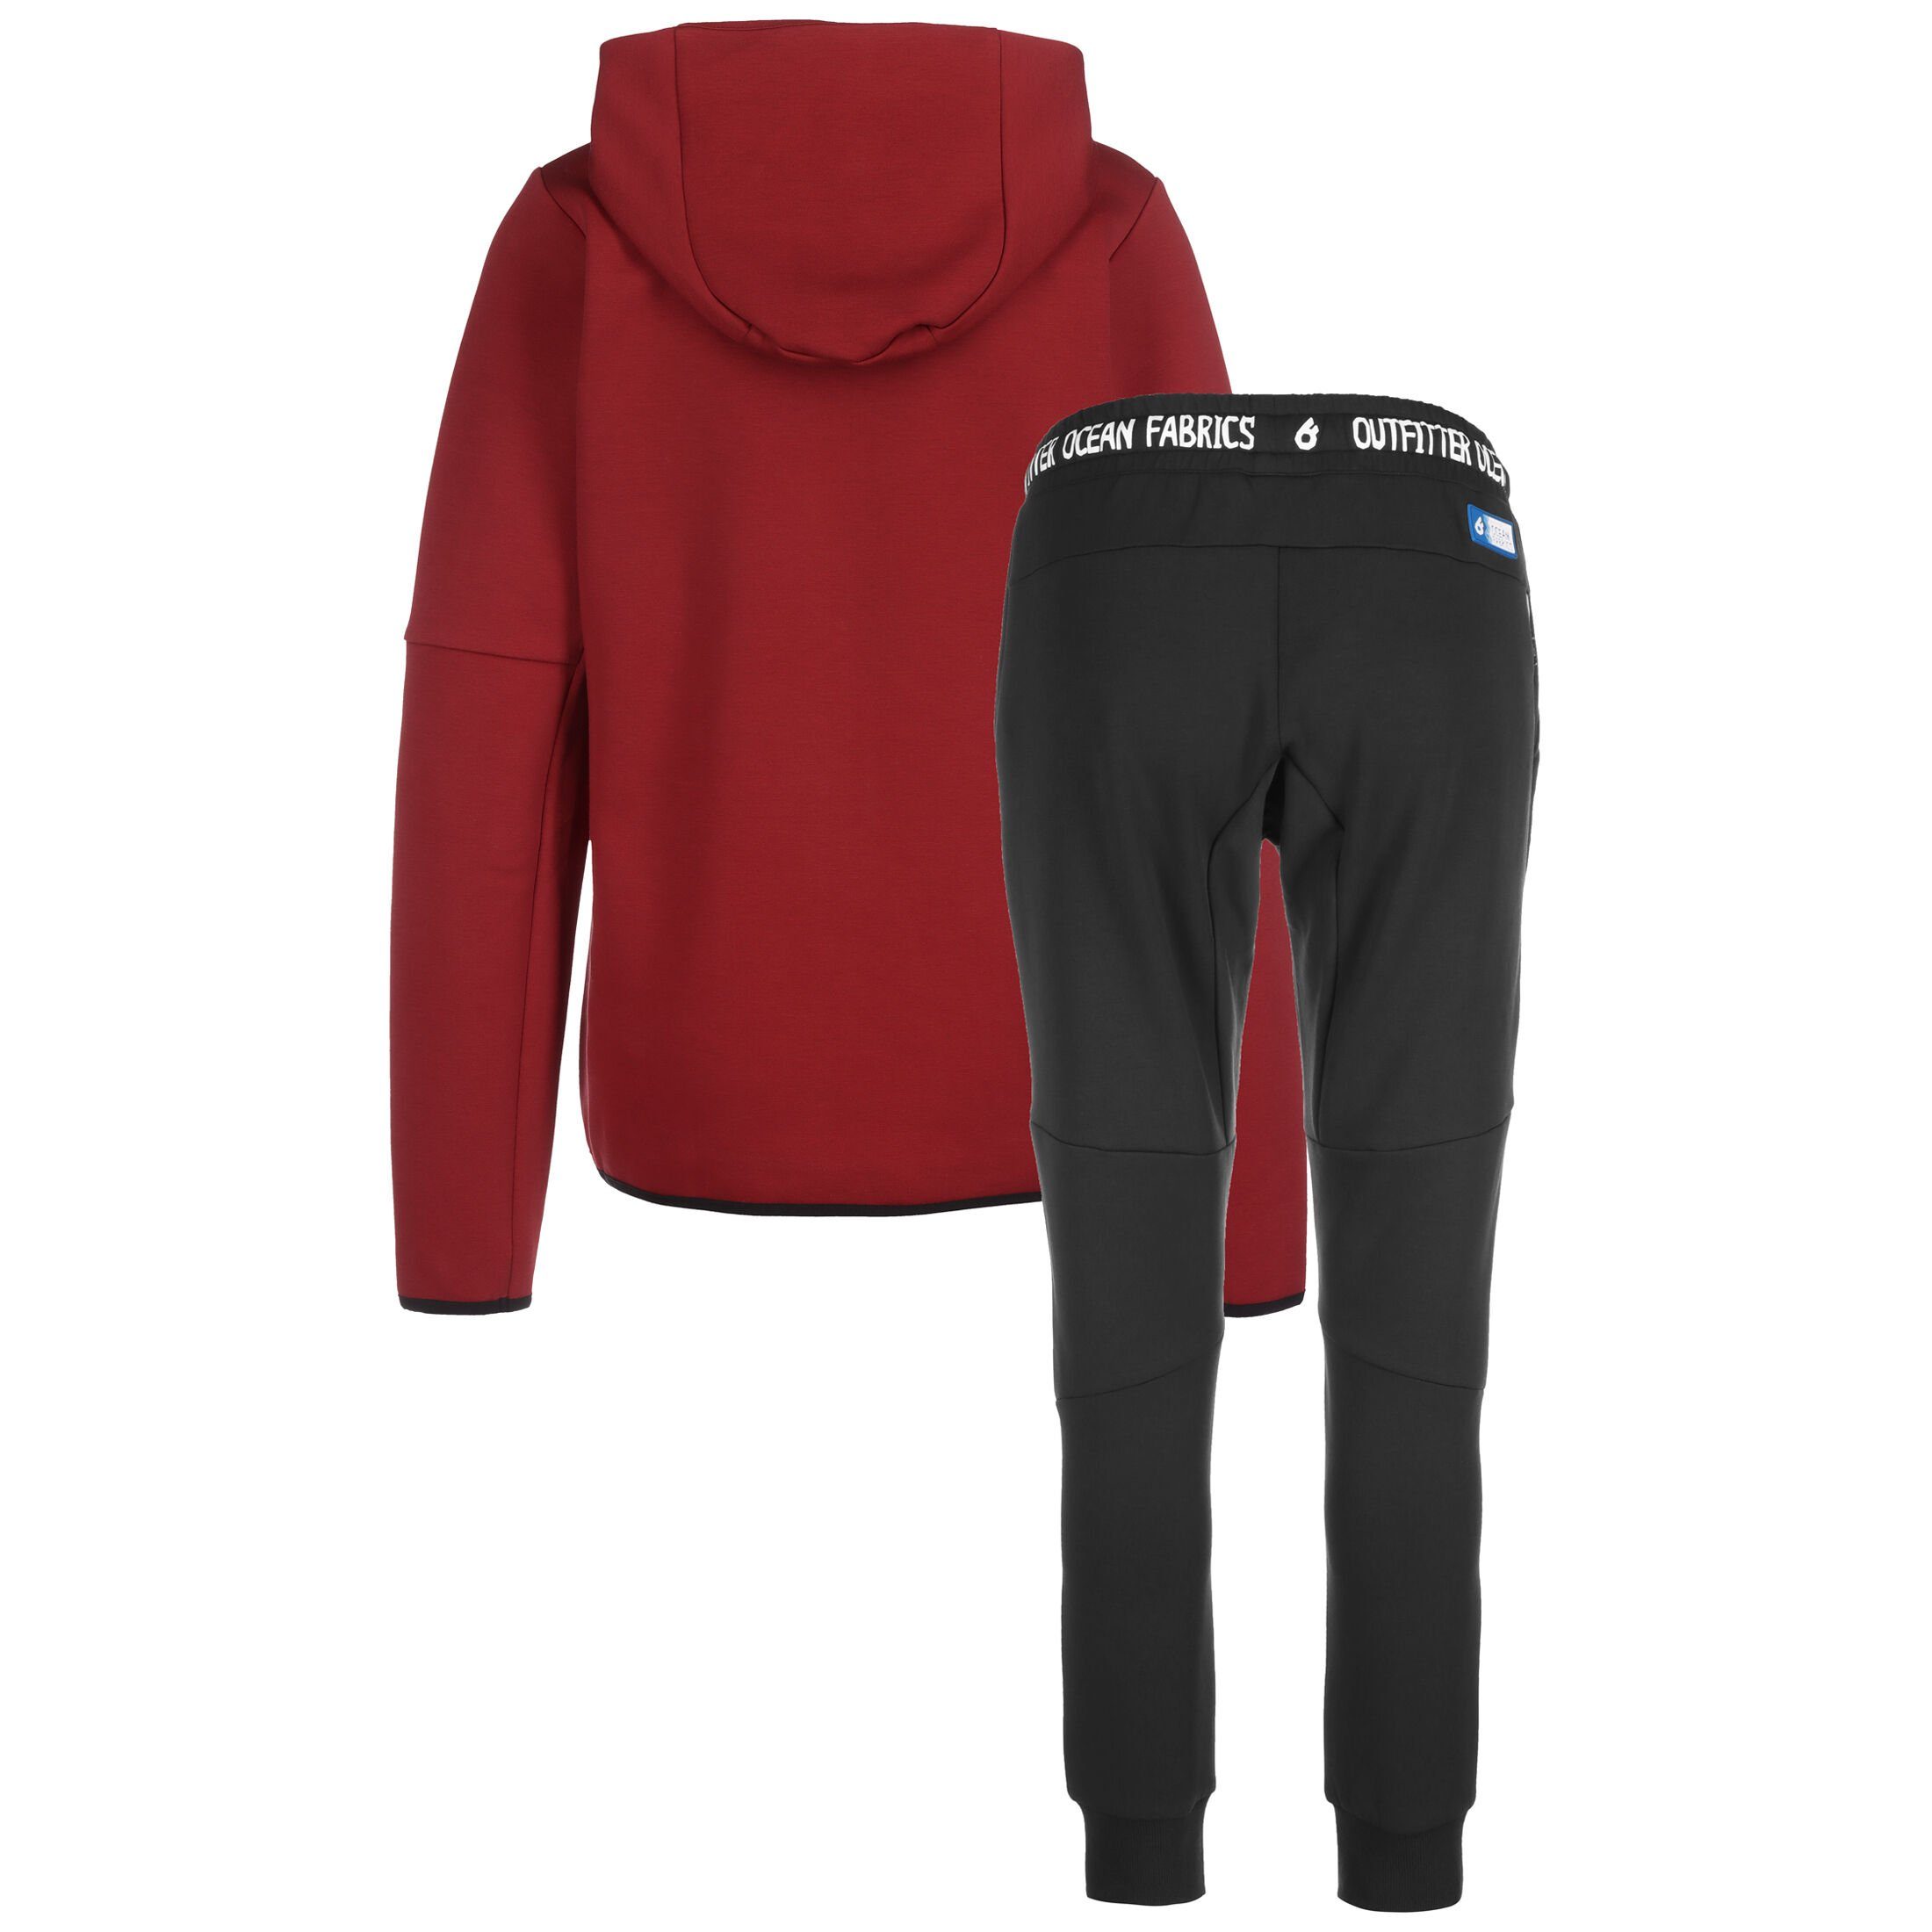 Outfitter Trainingsanzug Ocean Fabrics Jogginganzug rot Damen schwarz 